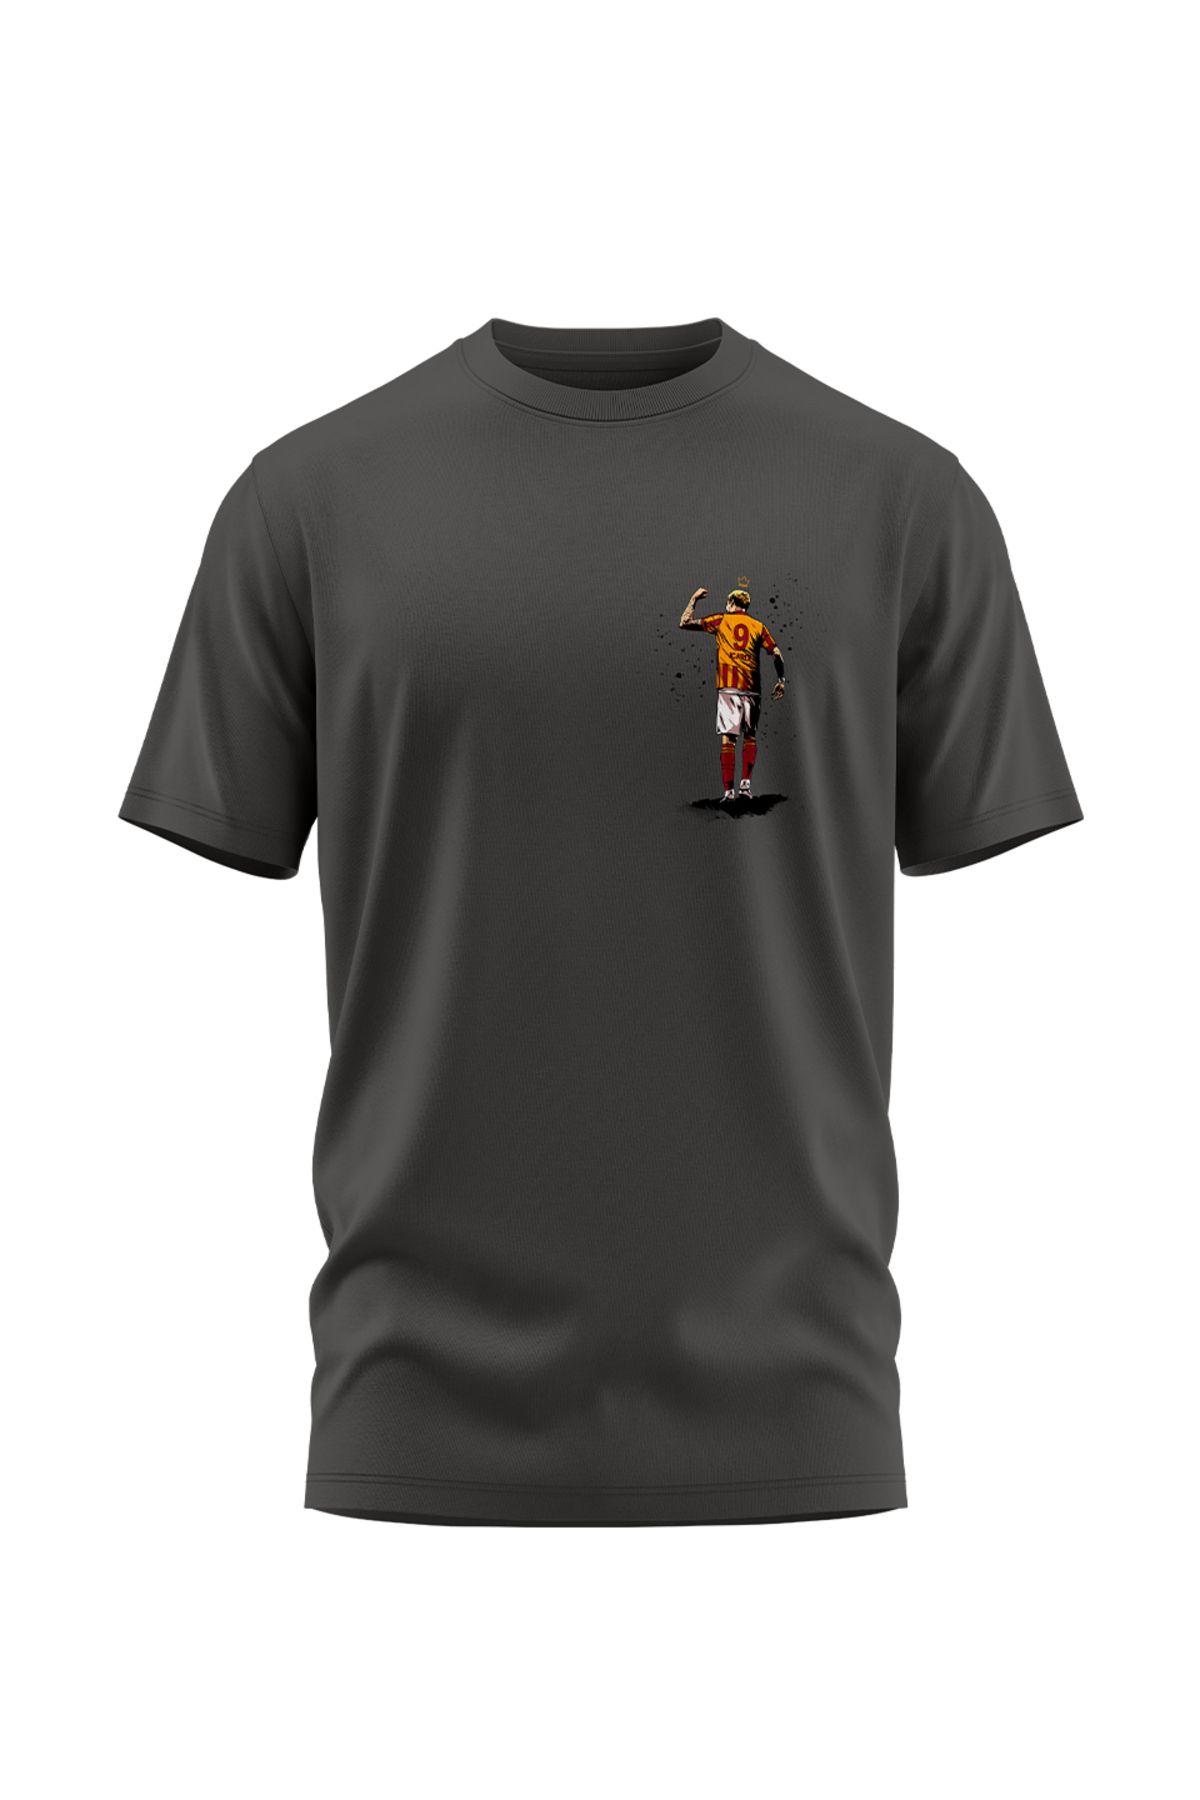 Galatasaray Galatasaray Çocuk Icardi T-shirt C232262